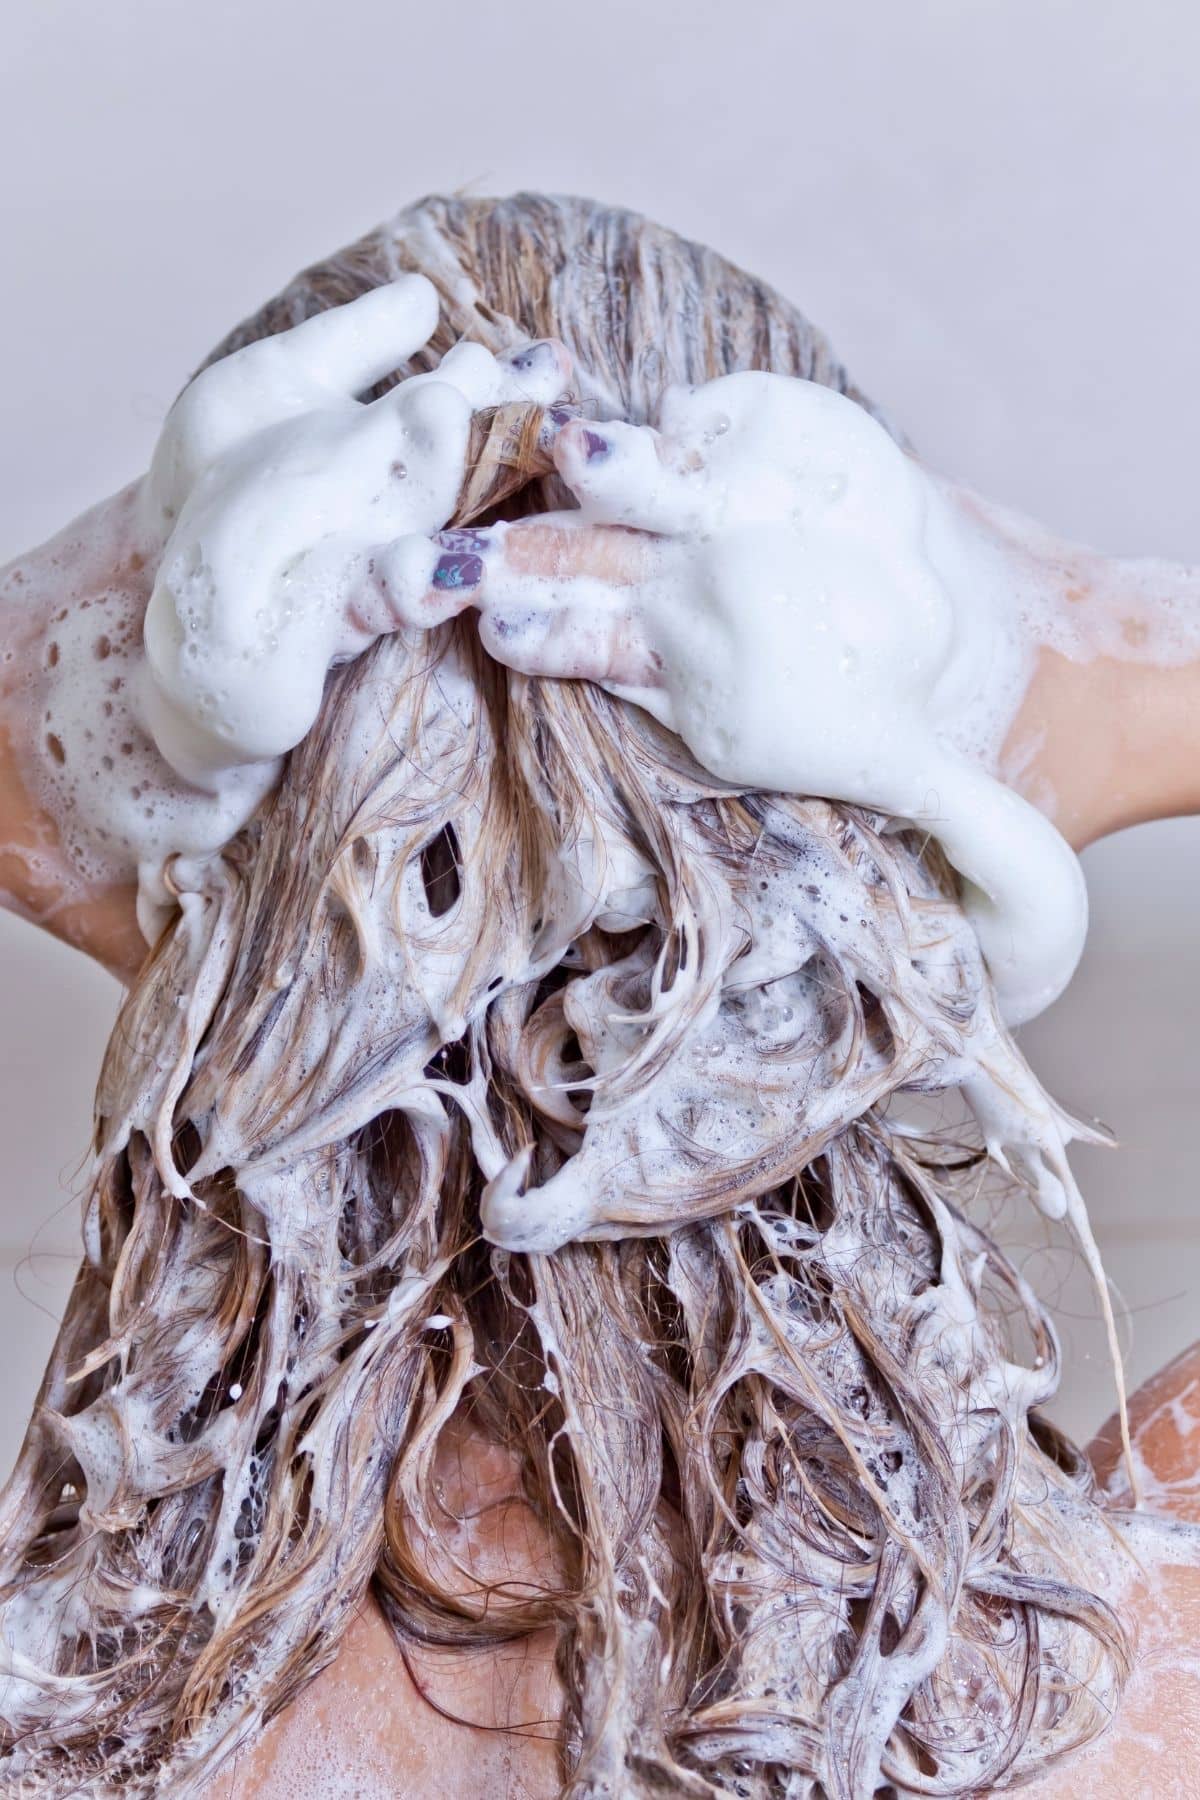 woman washing her hair